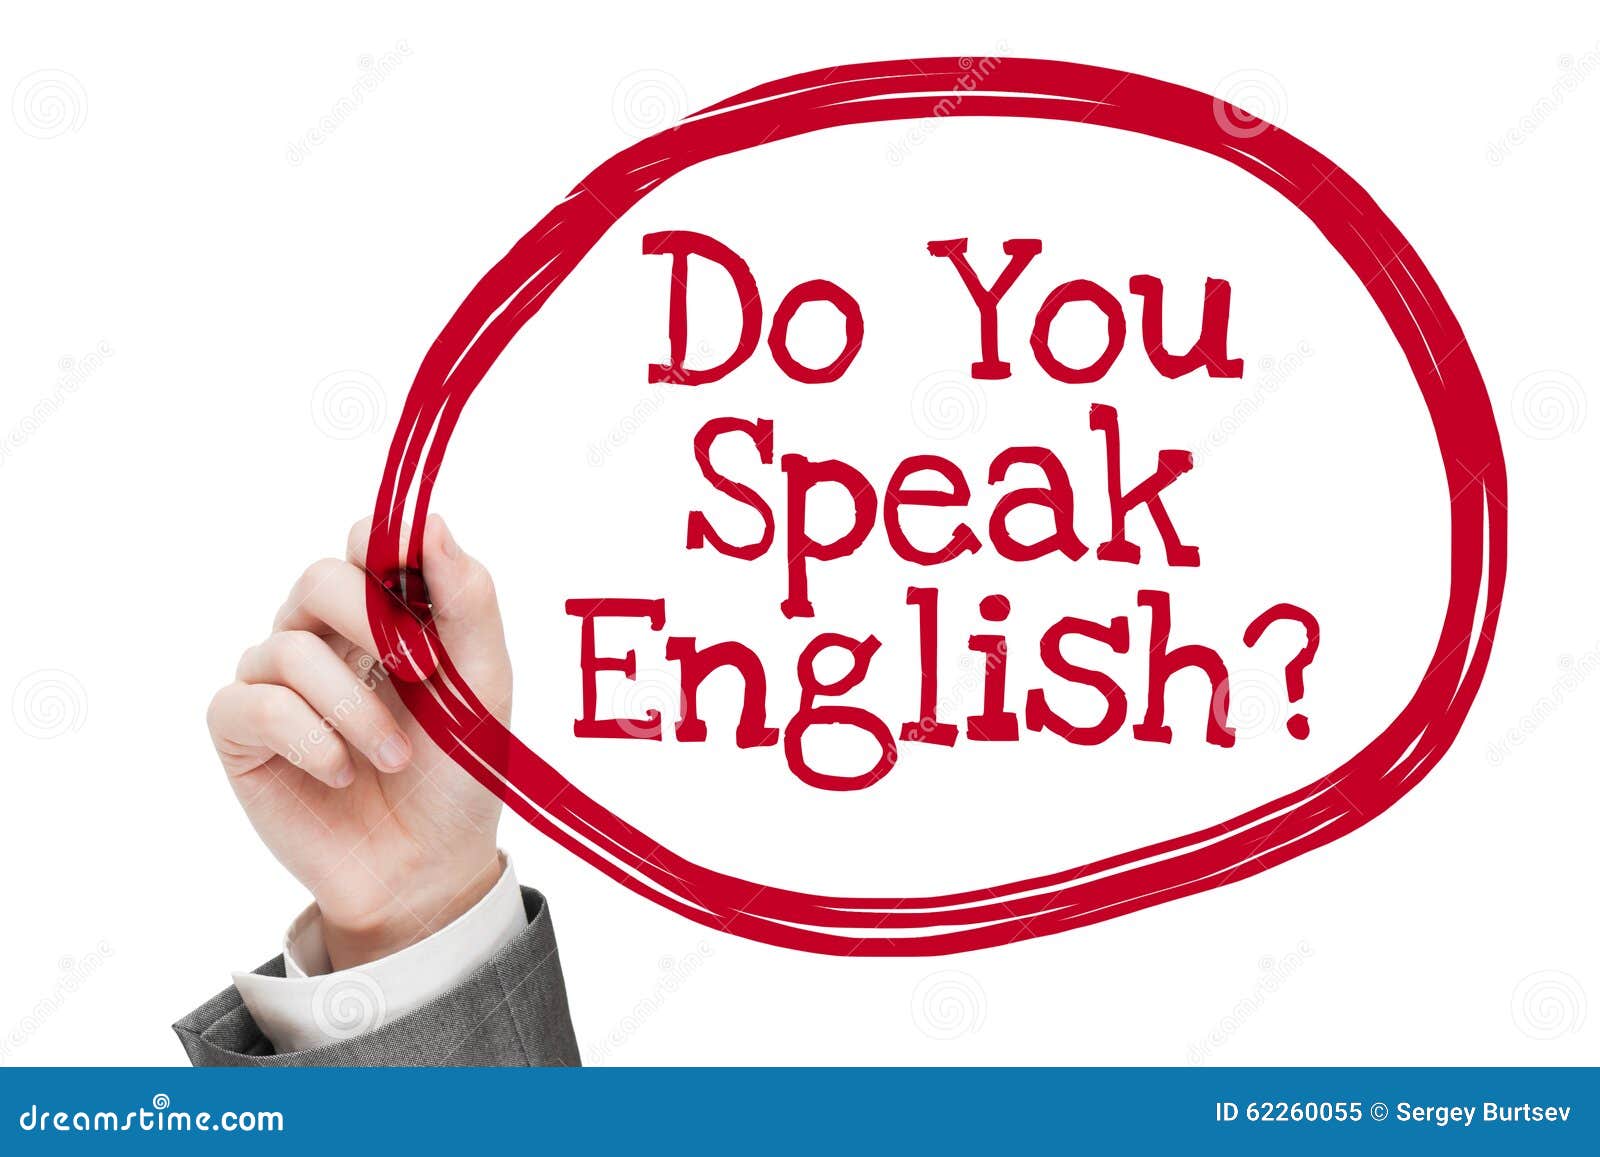 Do you speak English картинки. Can you speak English. Do you speak english yes